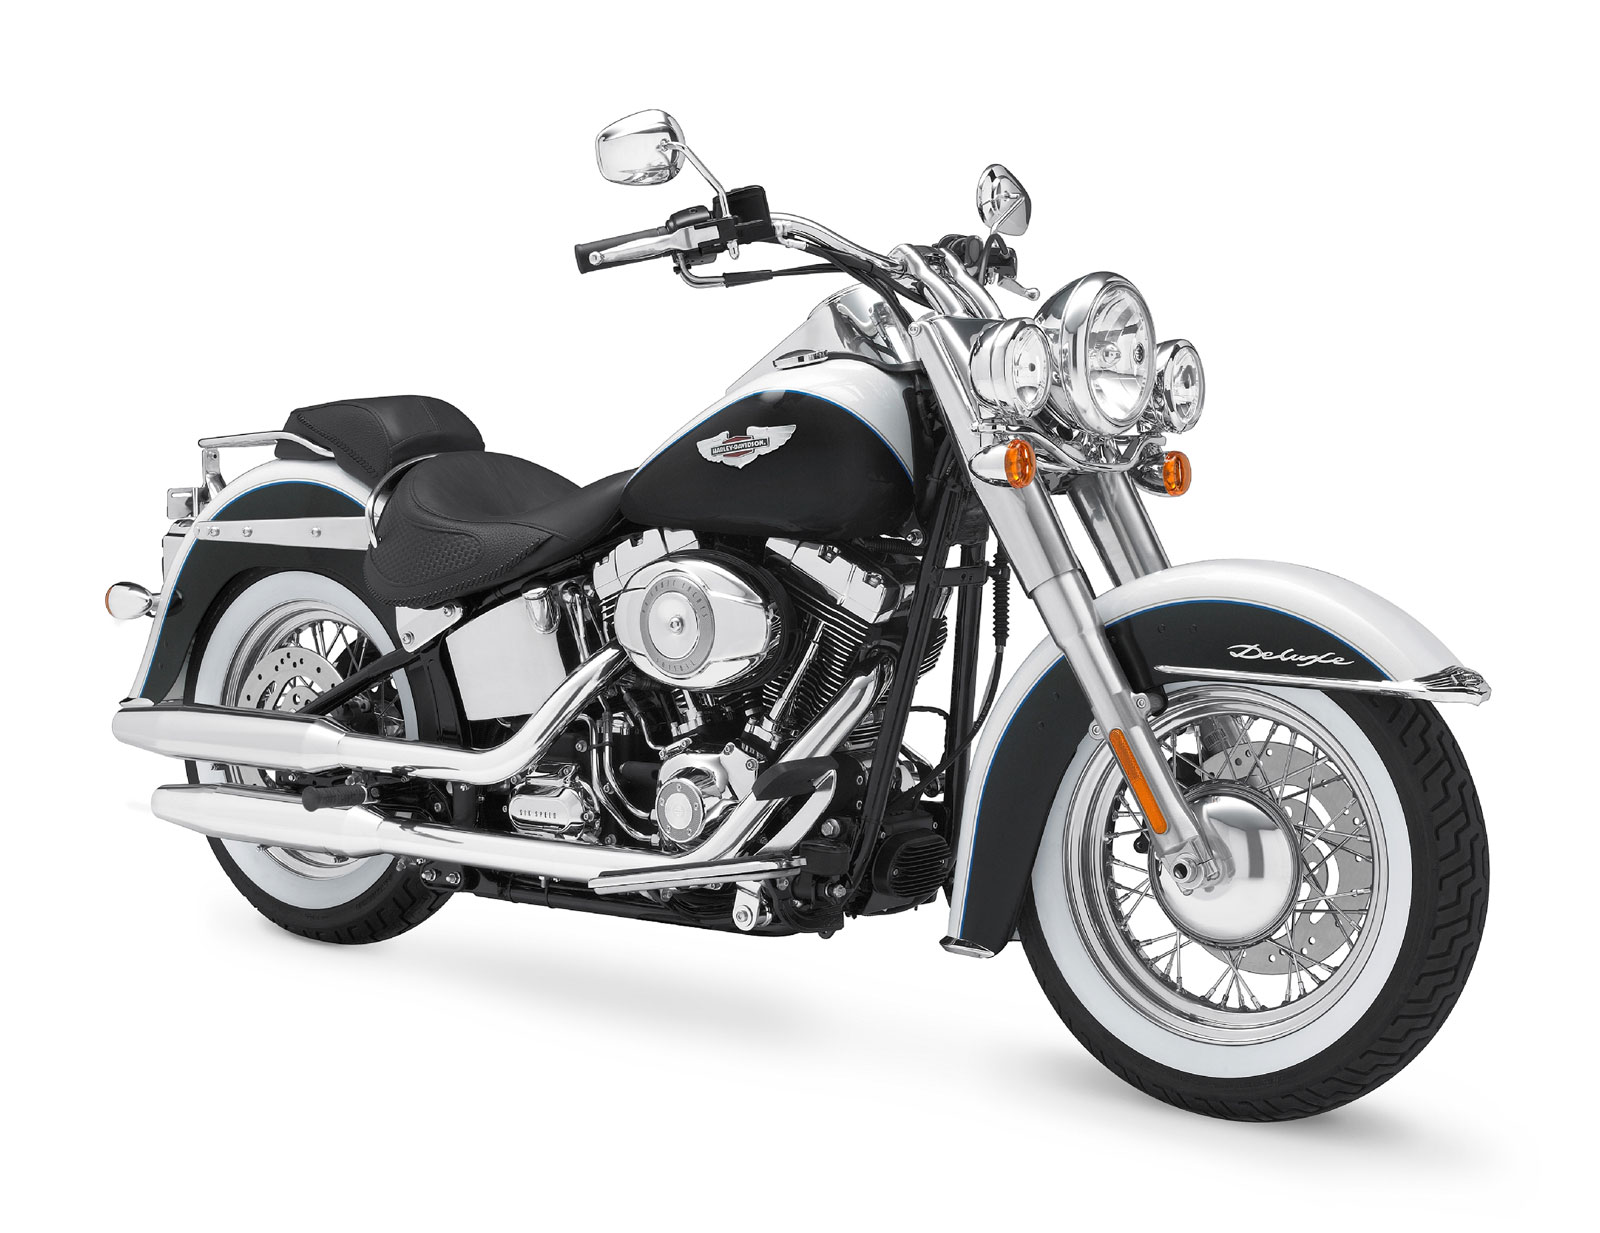 99 Modifikasi Motor Tiger Jadi Harley Terbaru Oneng Motomania